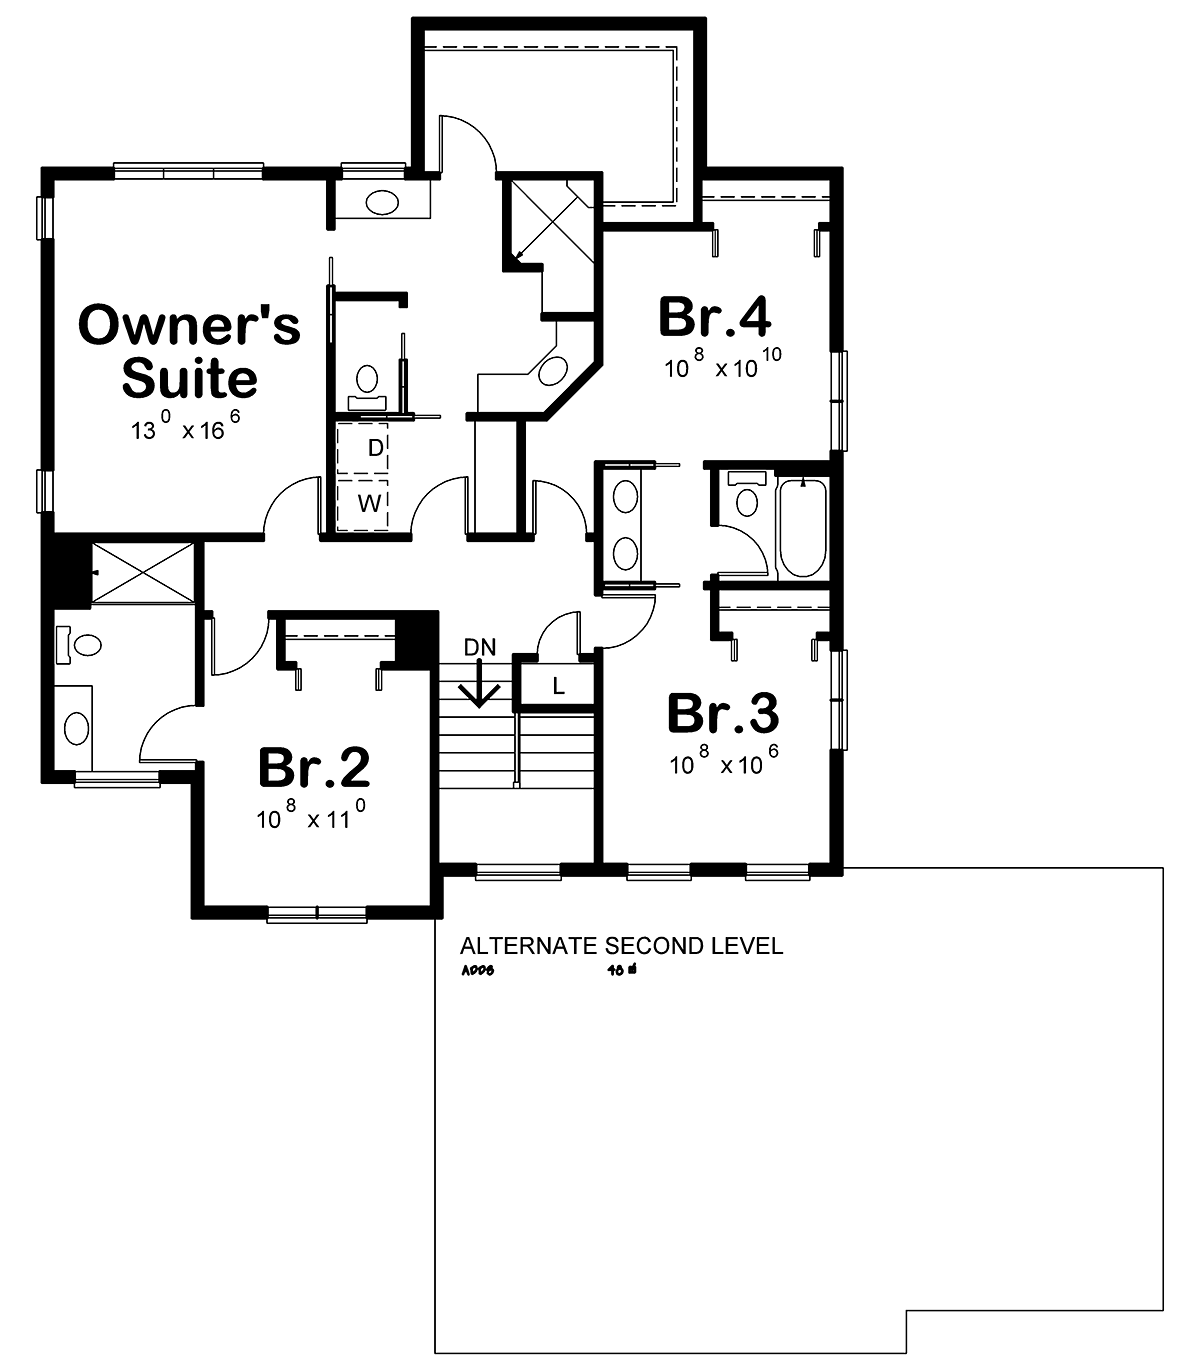 House Plan 81444 Alternate Level Two